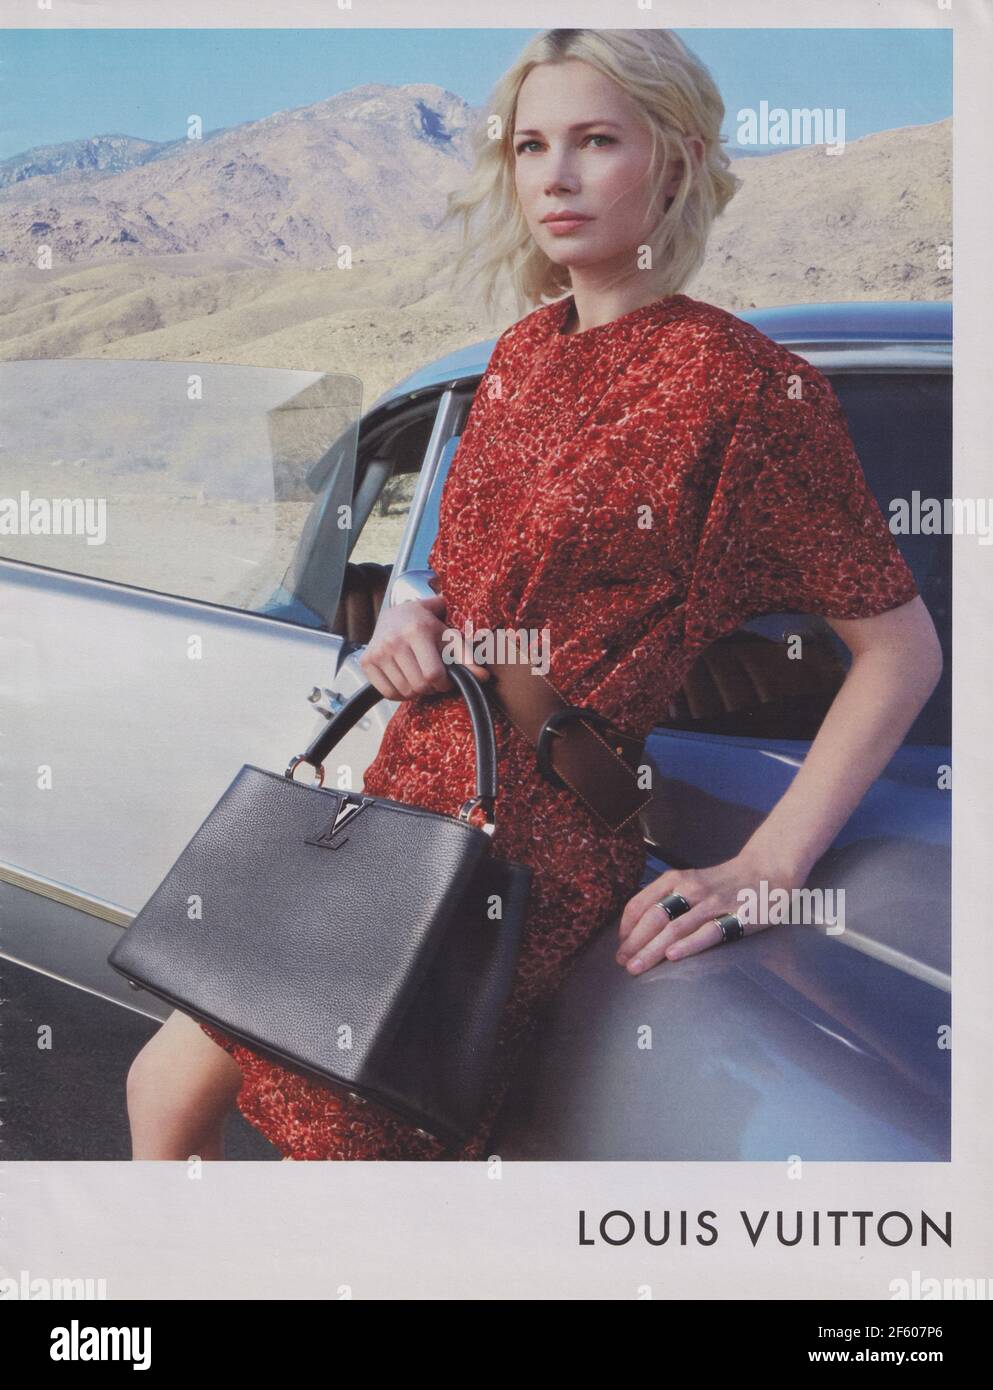 Photos: Michelle Williams for Louis Vuitton 2014 Campaign